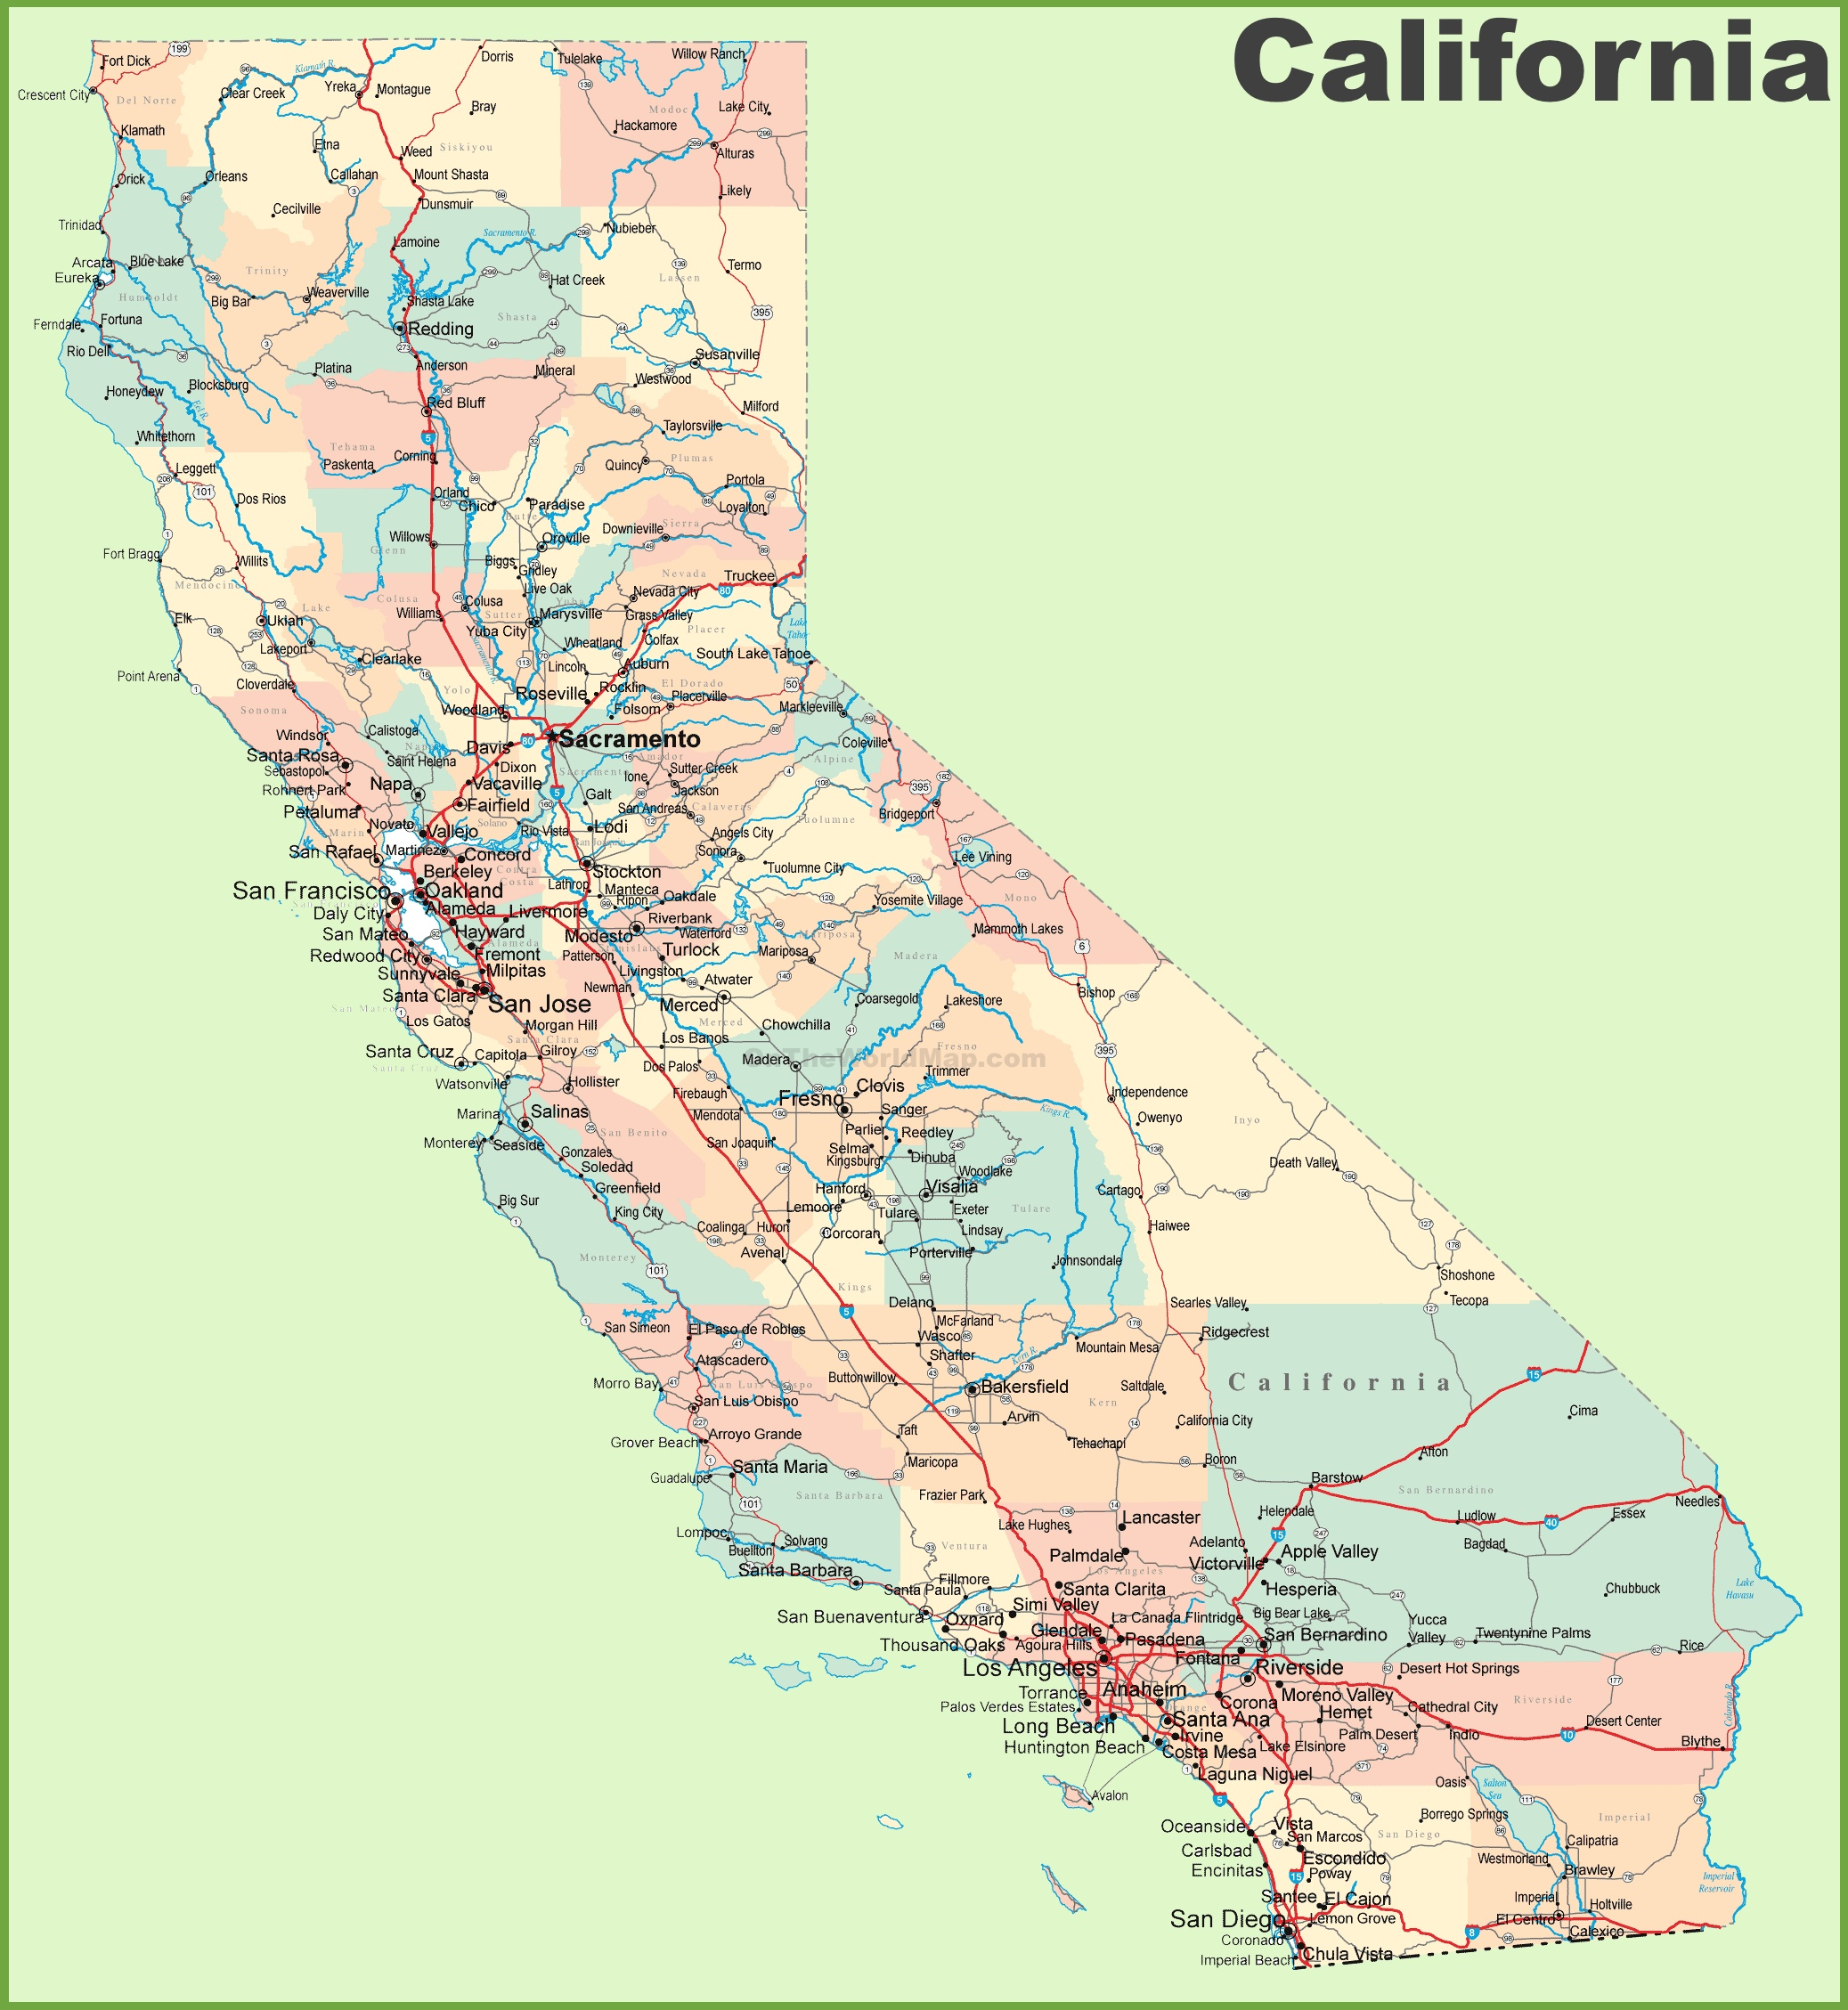 Rancho Cucamonga California Map - Klipy - Rancho Cucamonga California Map